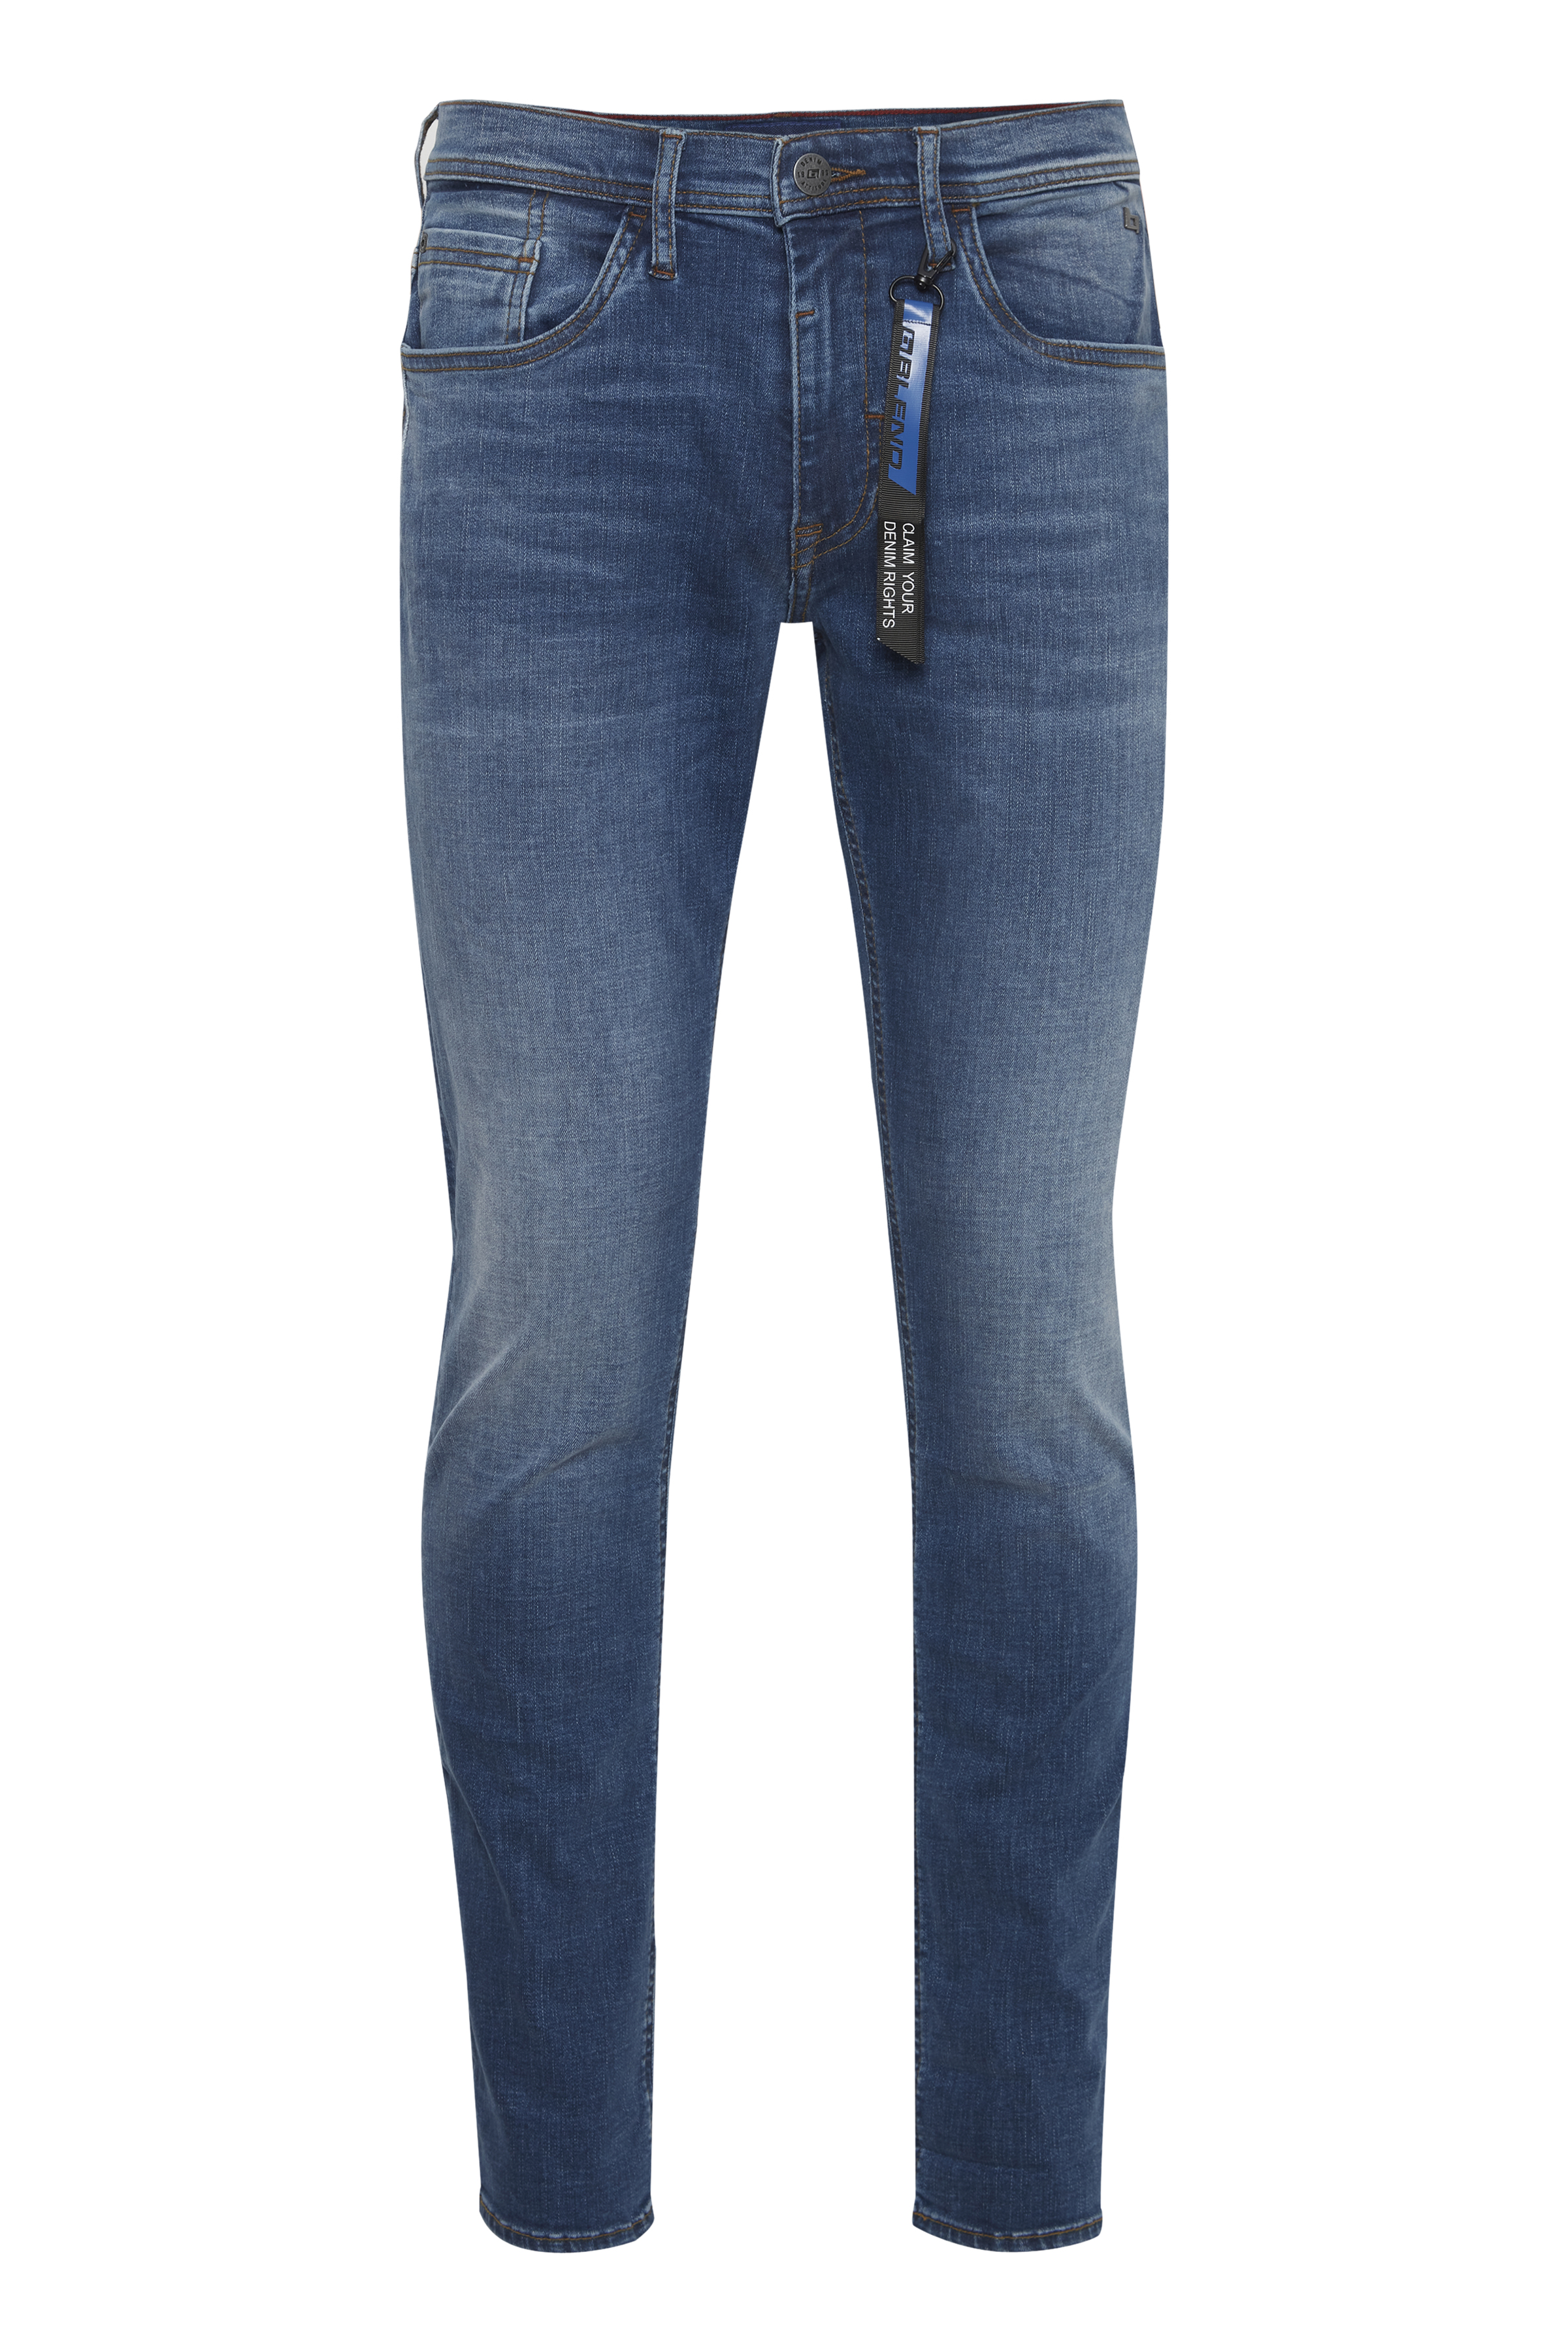 BLEND JEANS TWISTER denim middle blue buffies 20712391.200291 - MULTIFLEX |  MULTIFLEX | Twister | Blend Jeans | Männer Jeans | Jeans-Manufaktur